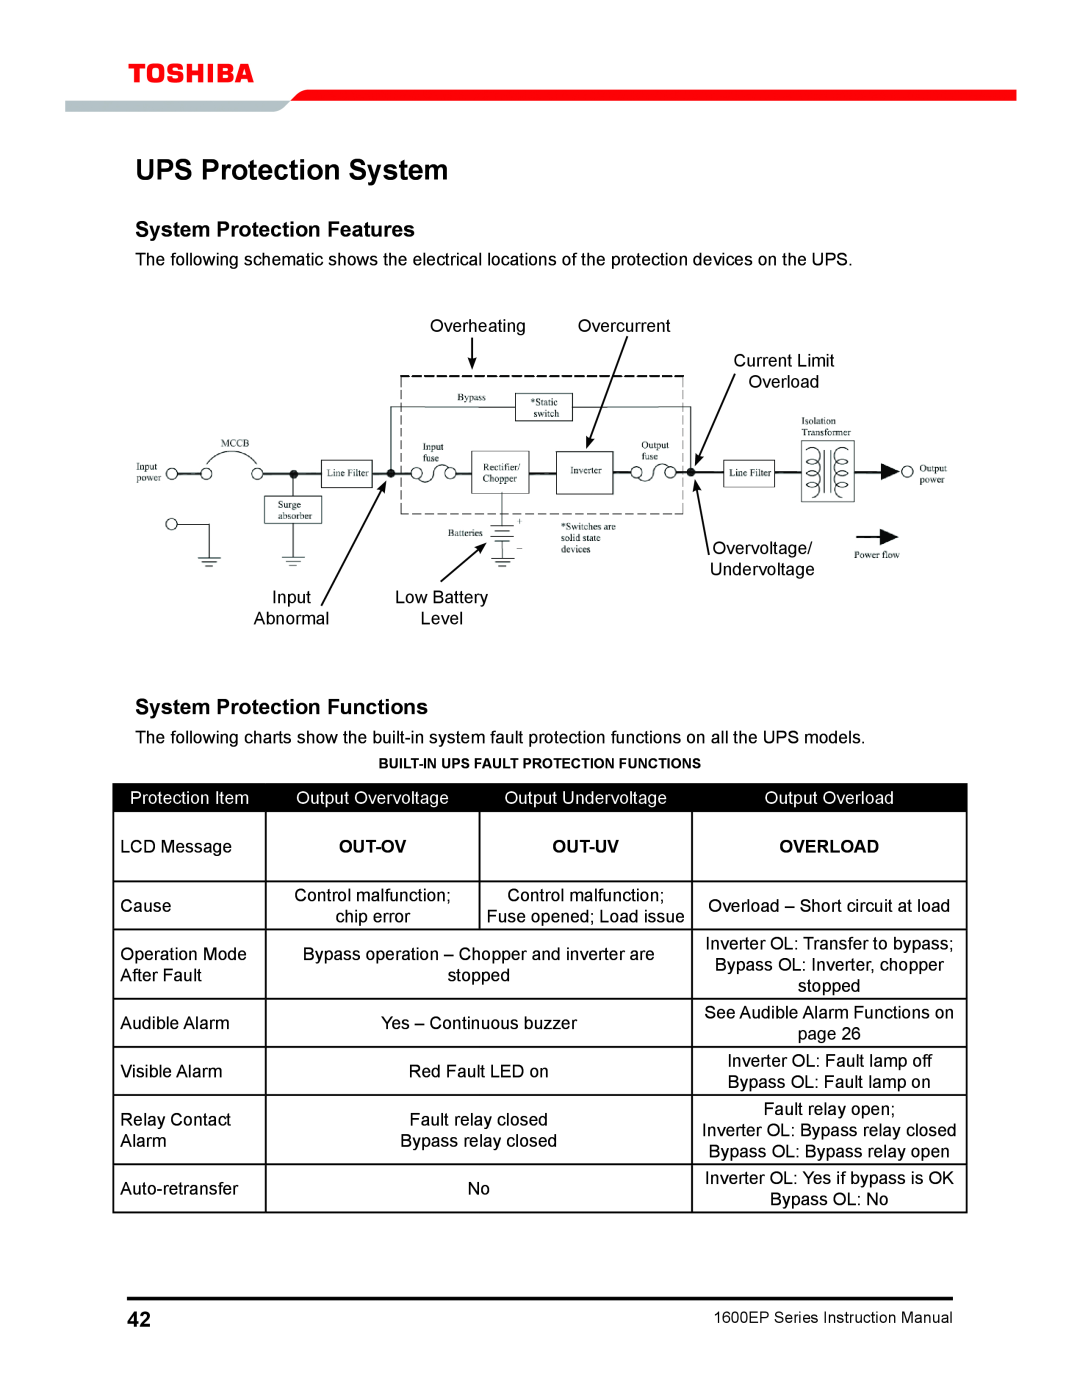 Toshiba 1600EP Series UPS Protection System, Protection Item, Output Overvoltage, Output Undervoltage, Output Overload 